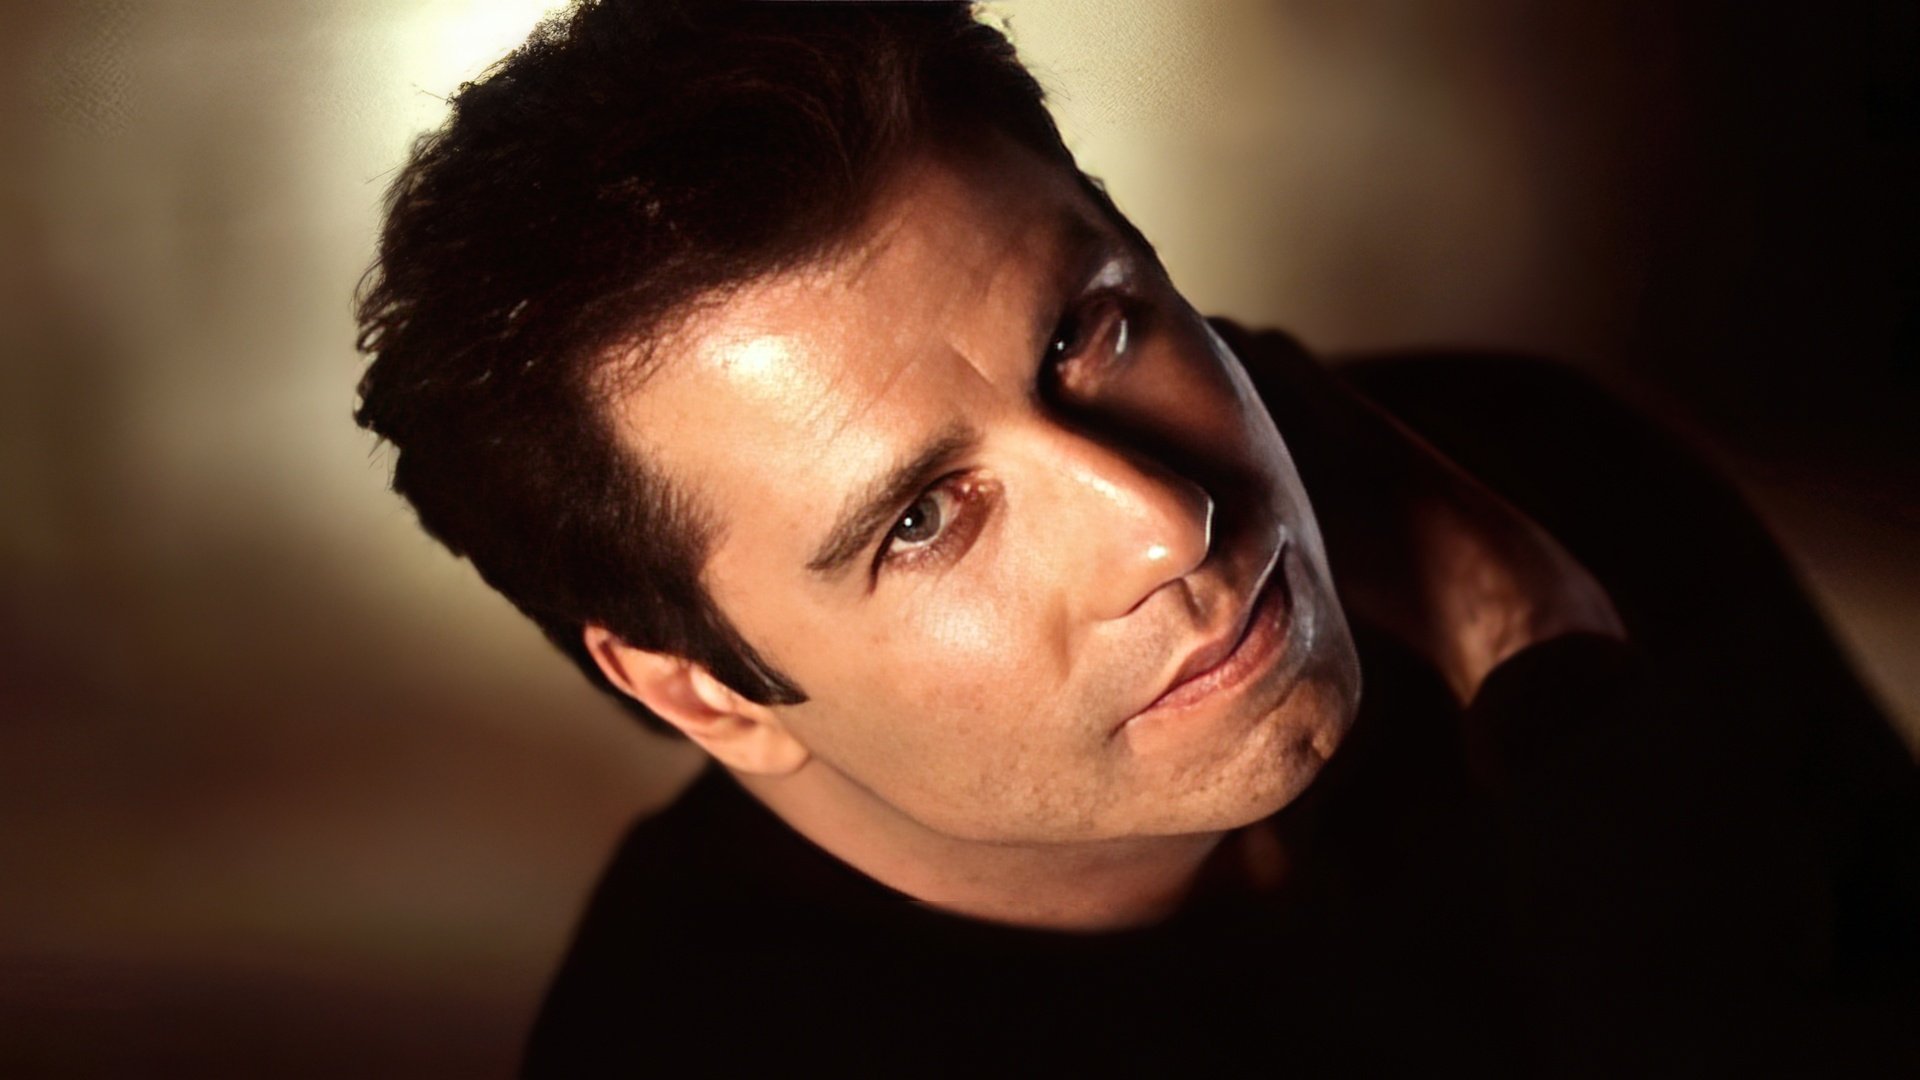 Actor and director John Travolta